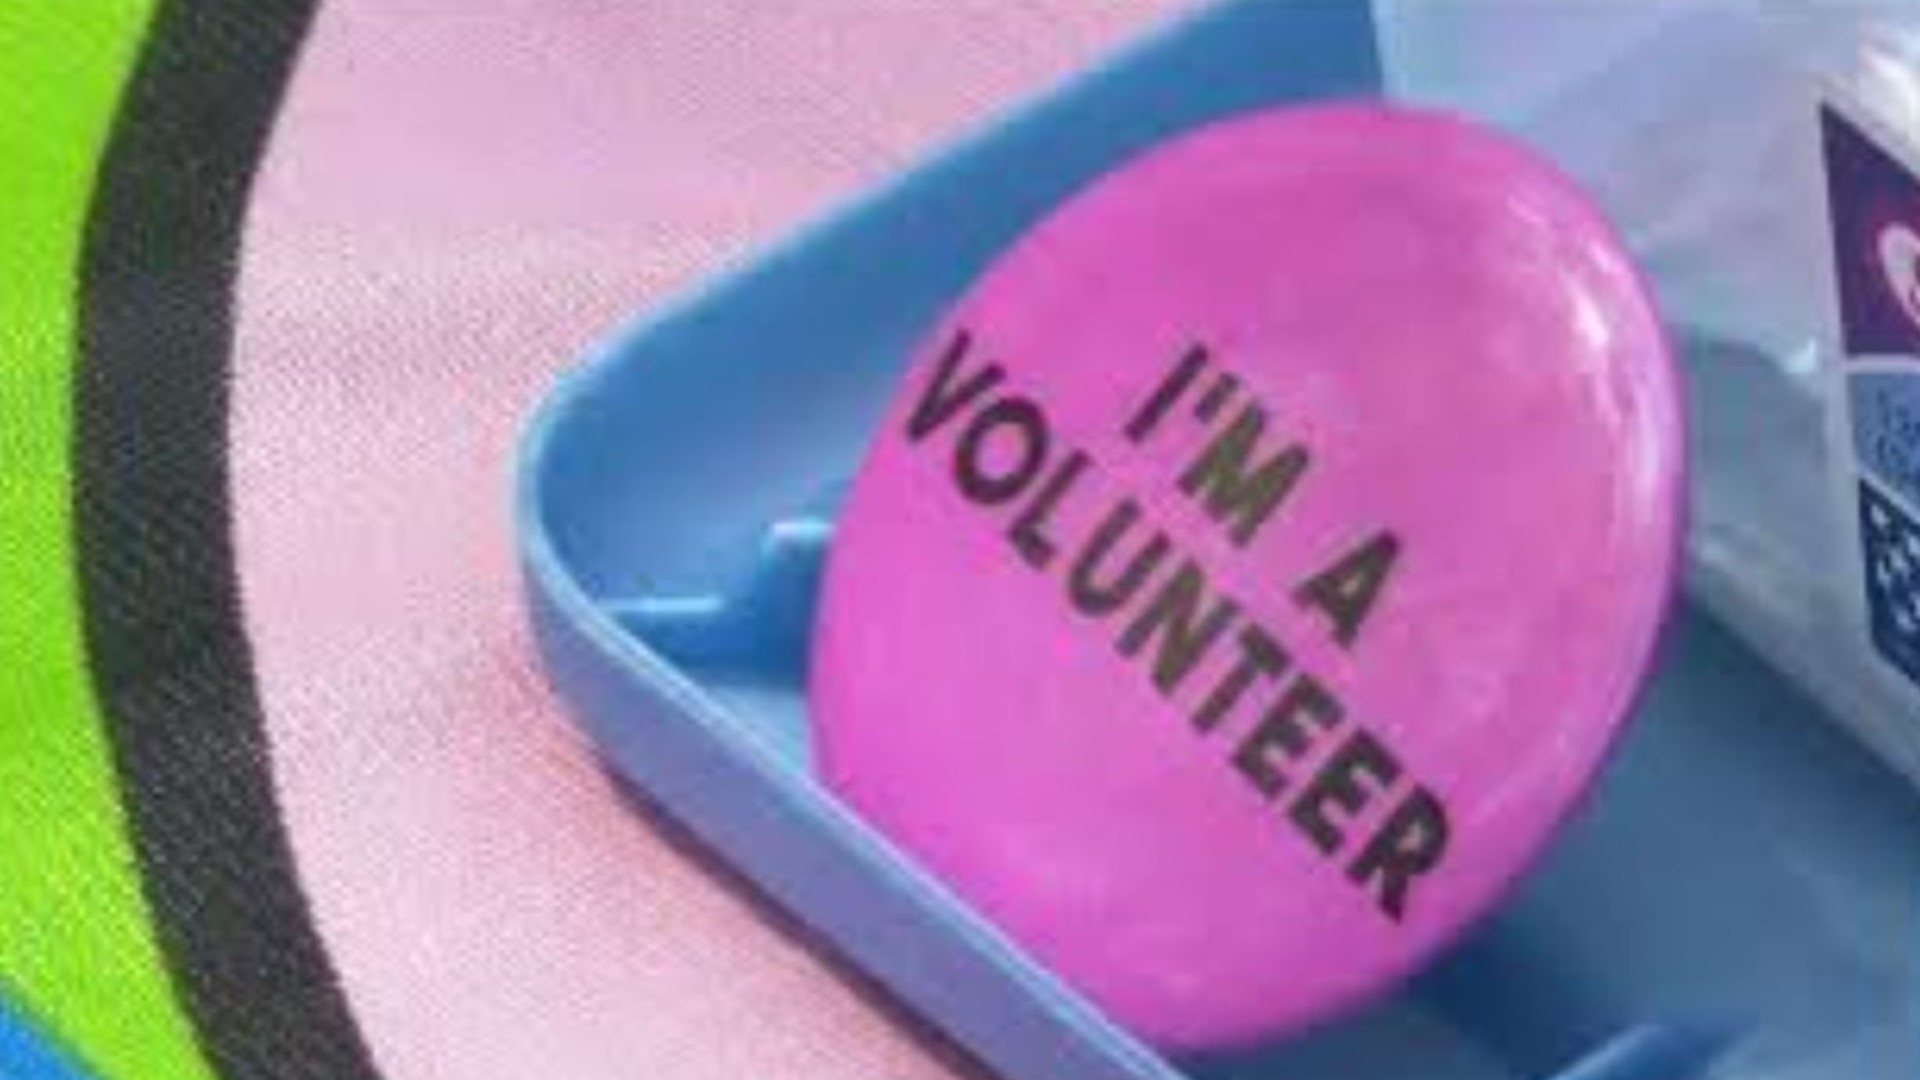 Atlanta pride organizers seeking volunteers | 11alive.com